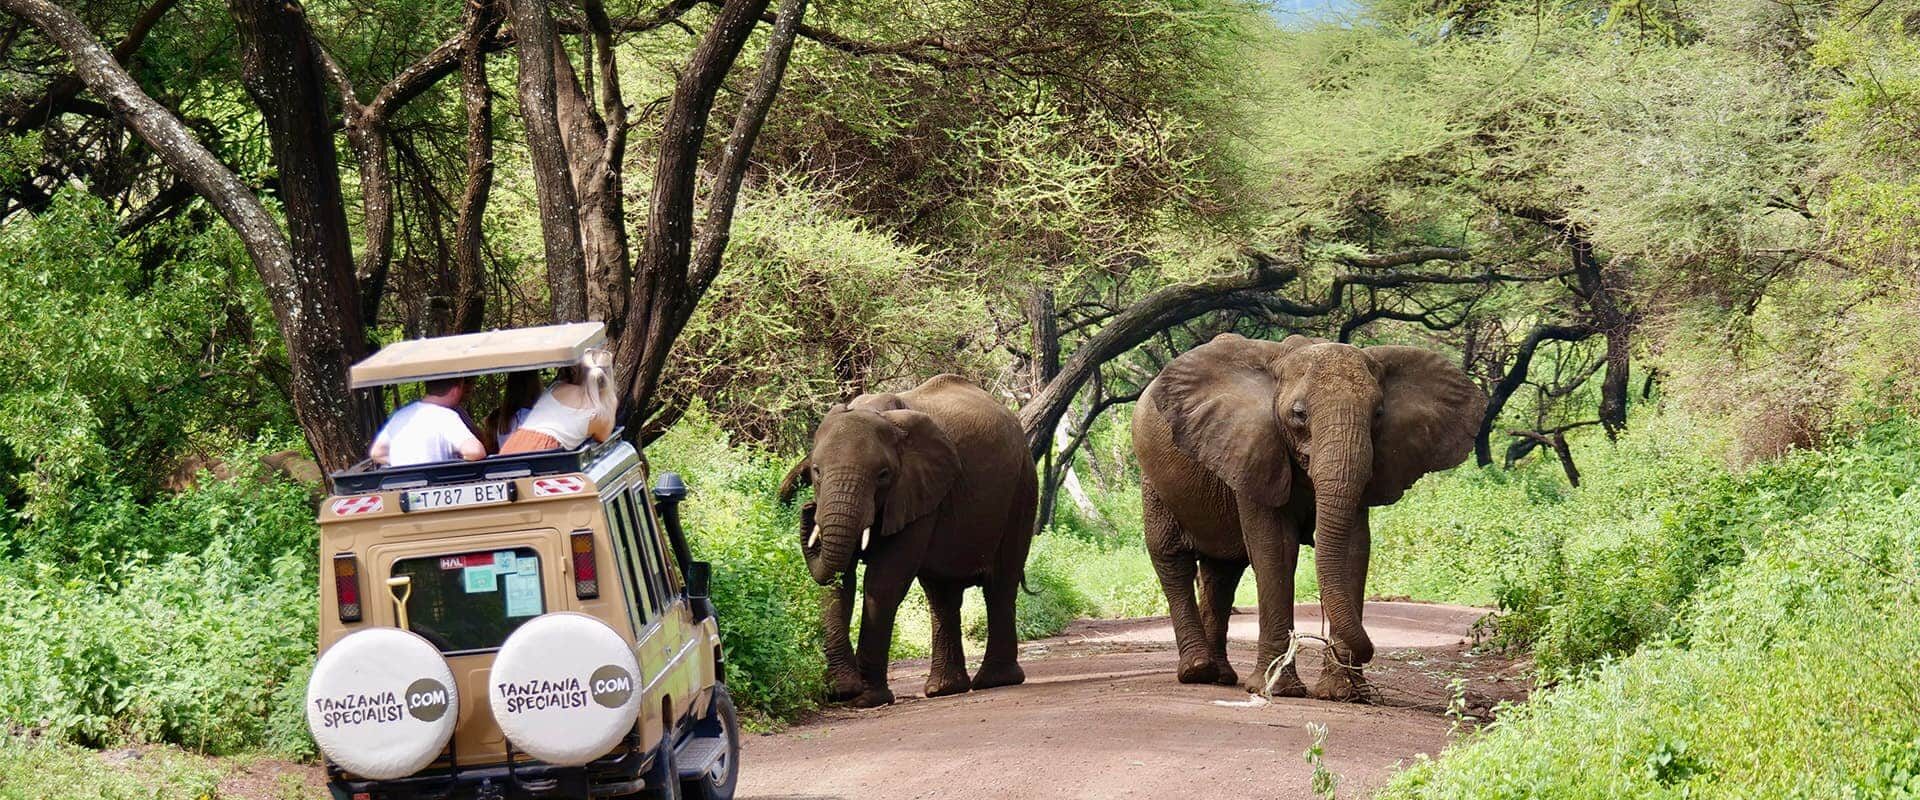 Safari Jeep watching elephants